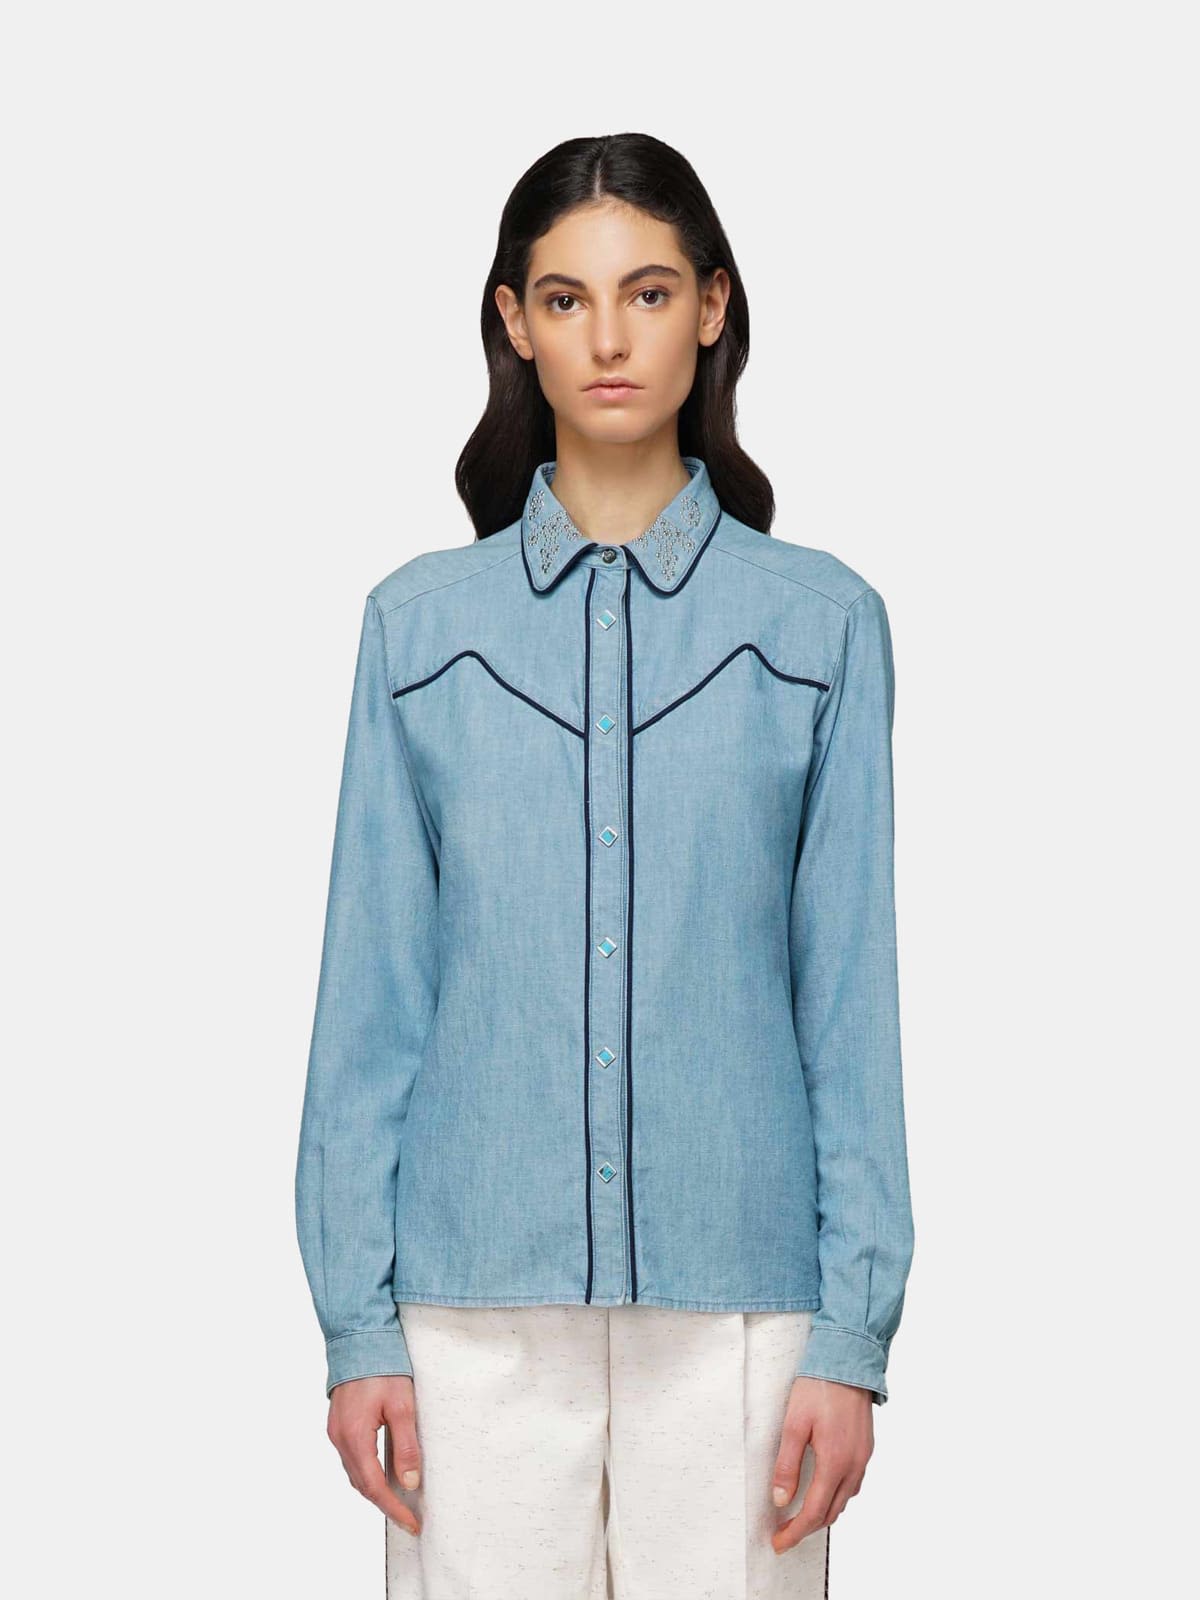 Alexa shirt in cotton denim